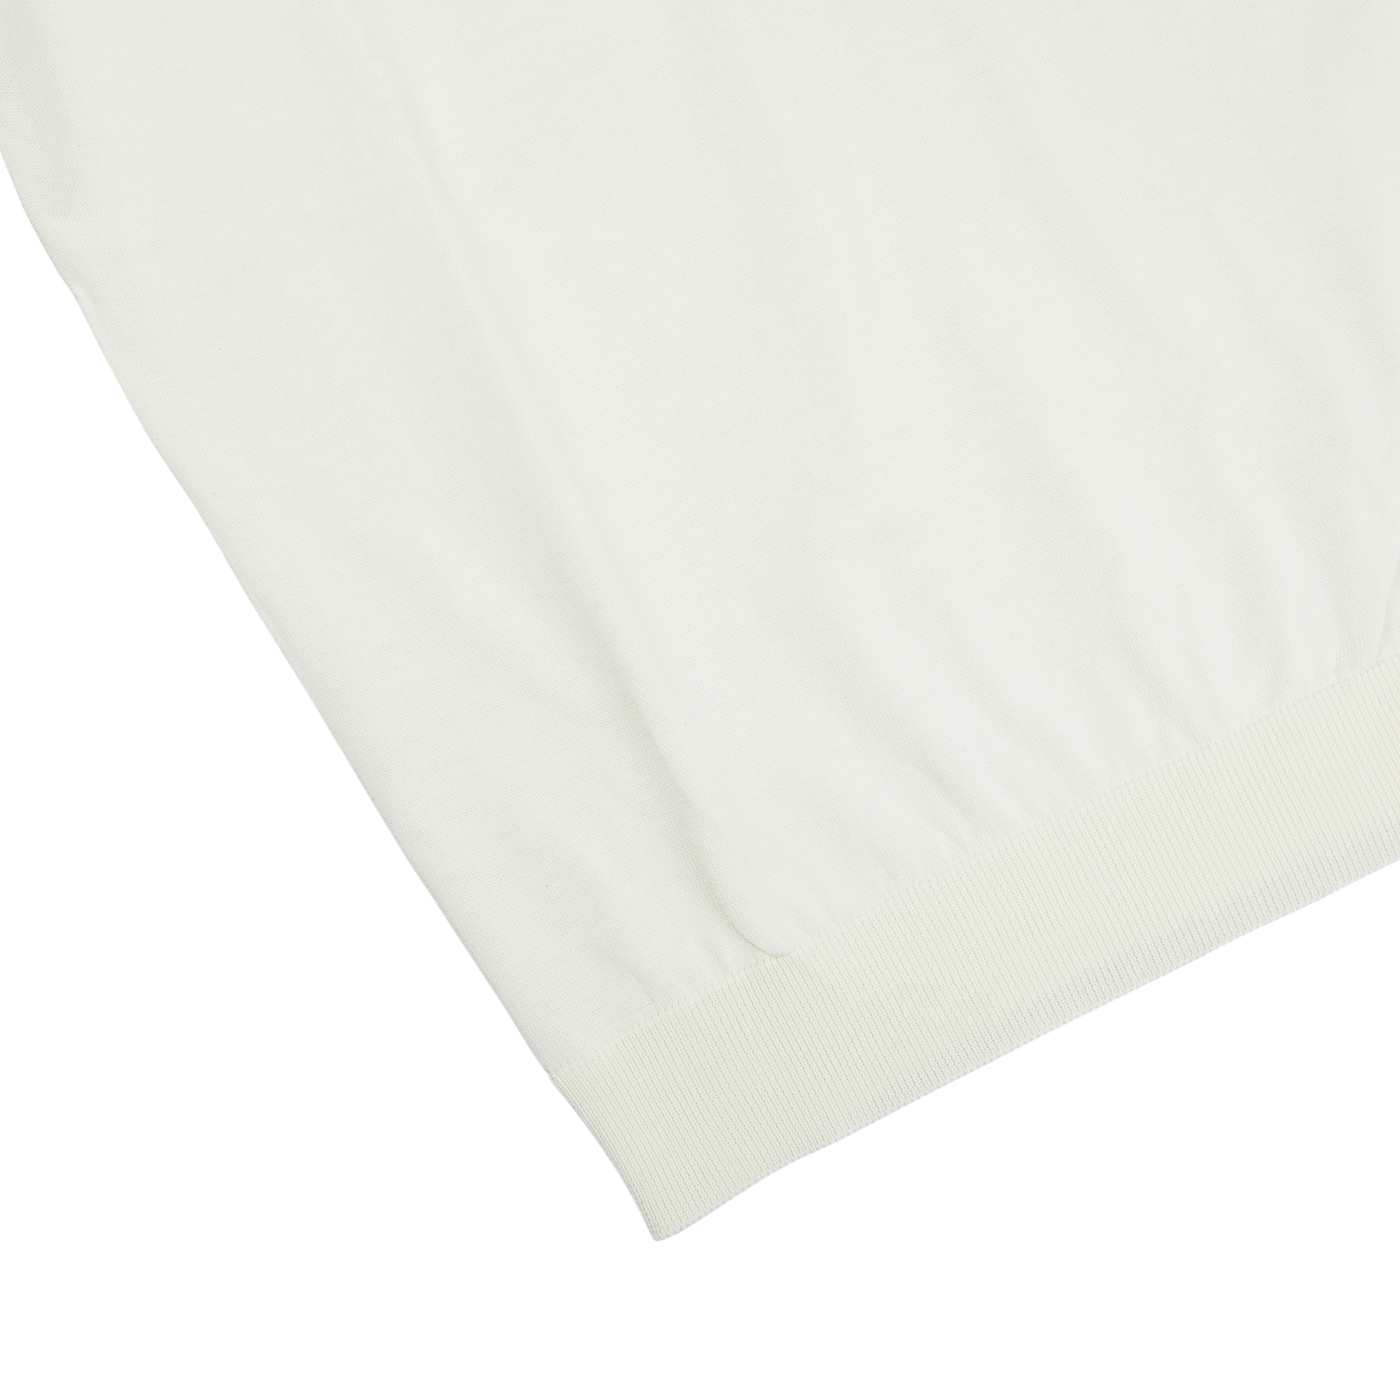 A Latte White Crepe Cotton Polo Shirt by Filippo de Laurentiis on a white surface.